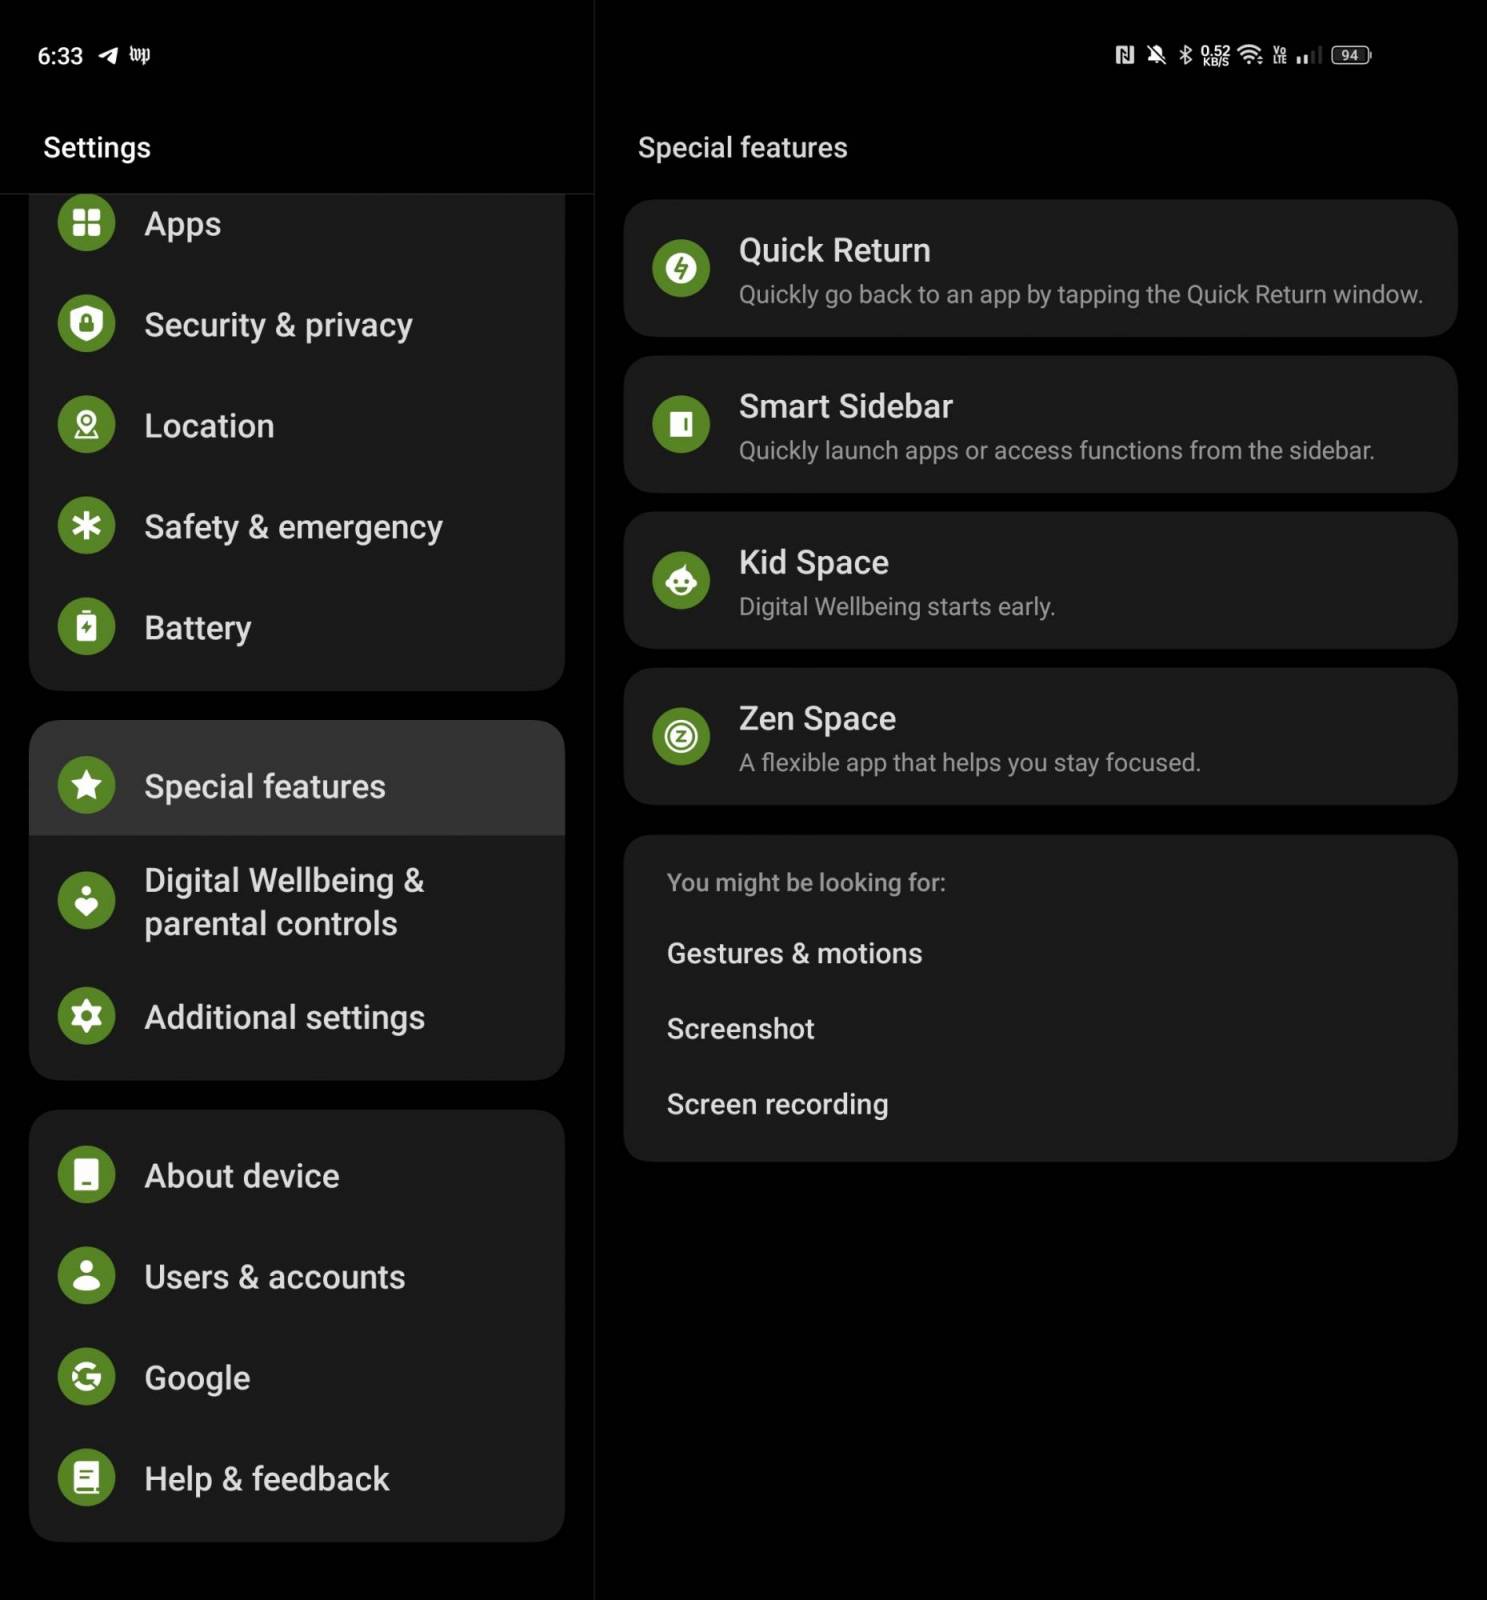 OnePlus Open Smart Sidebar